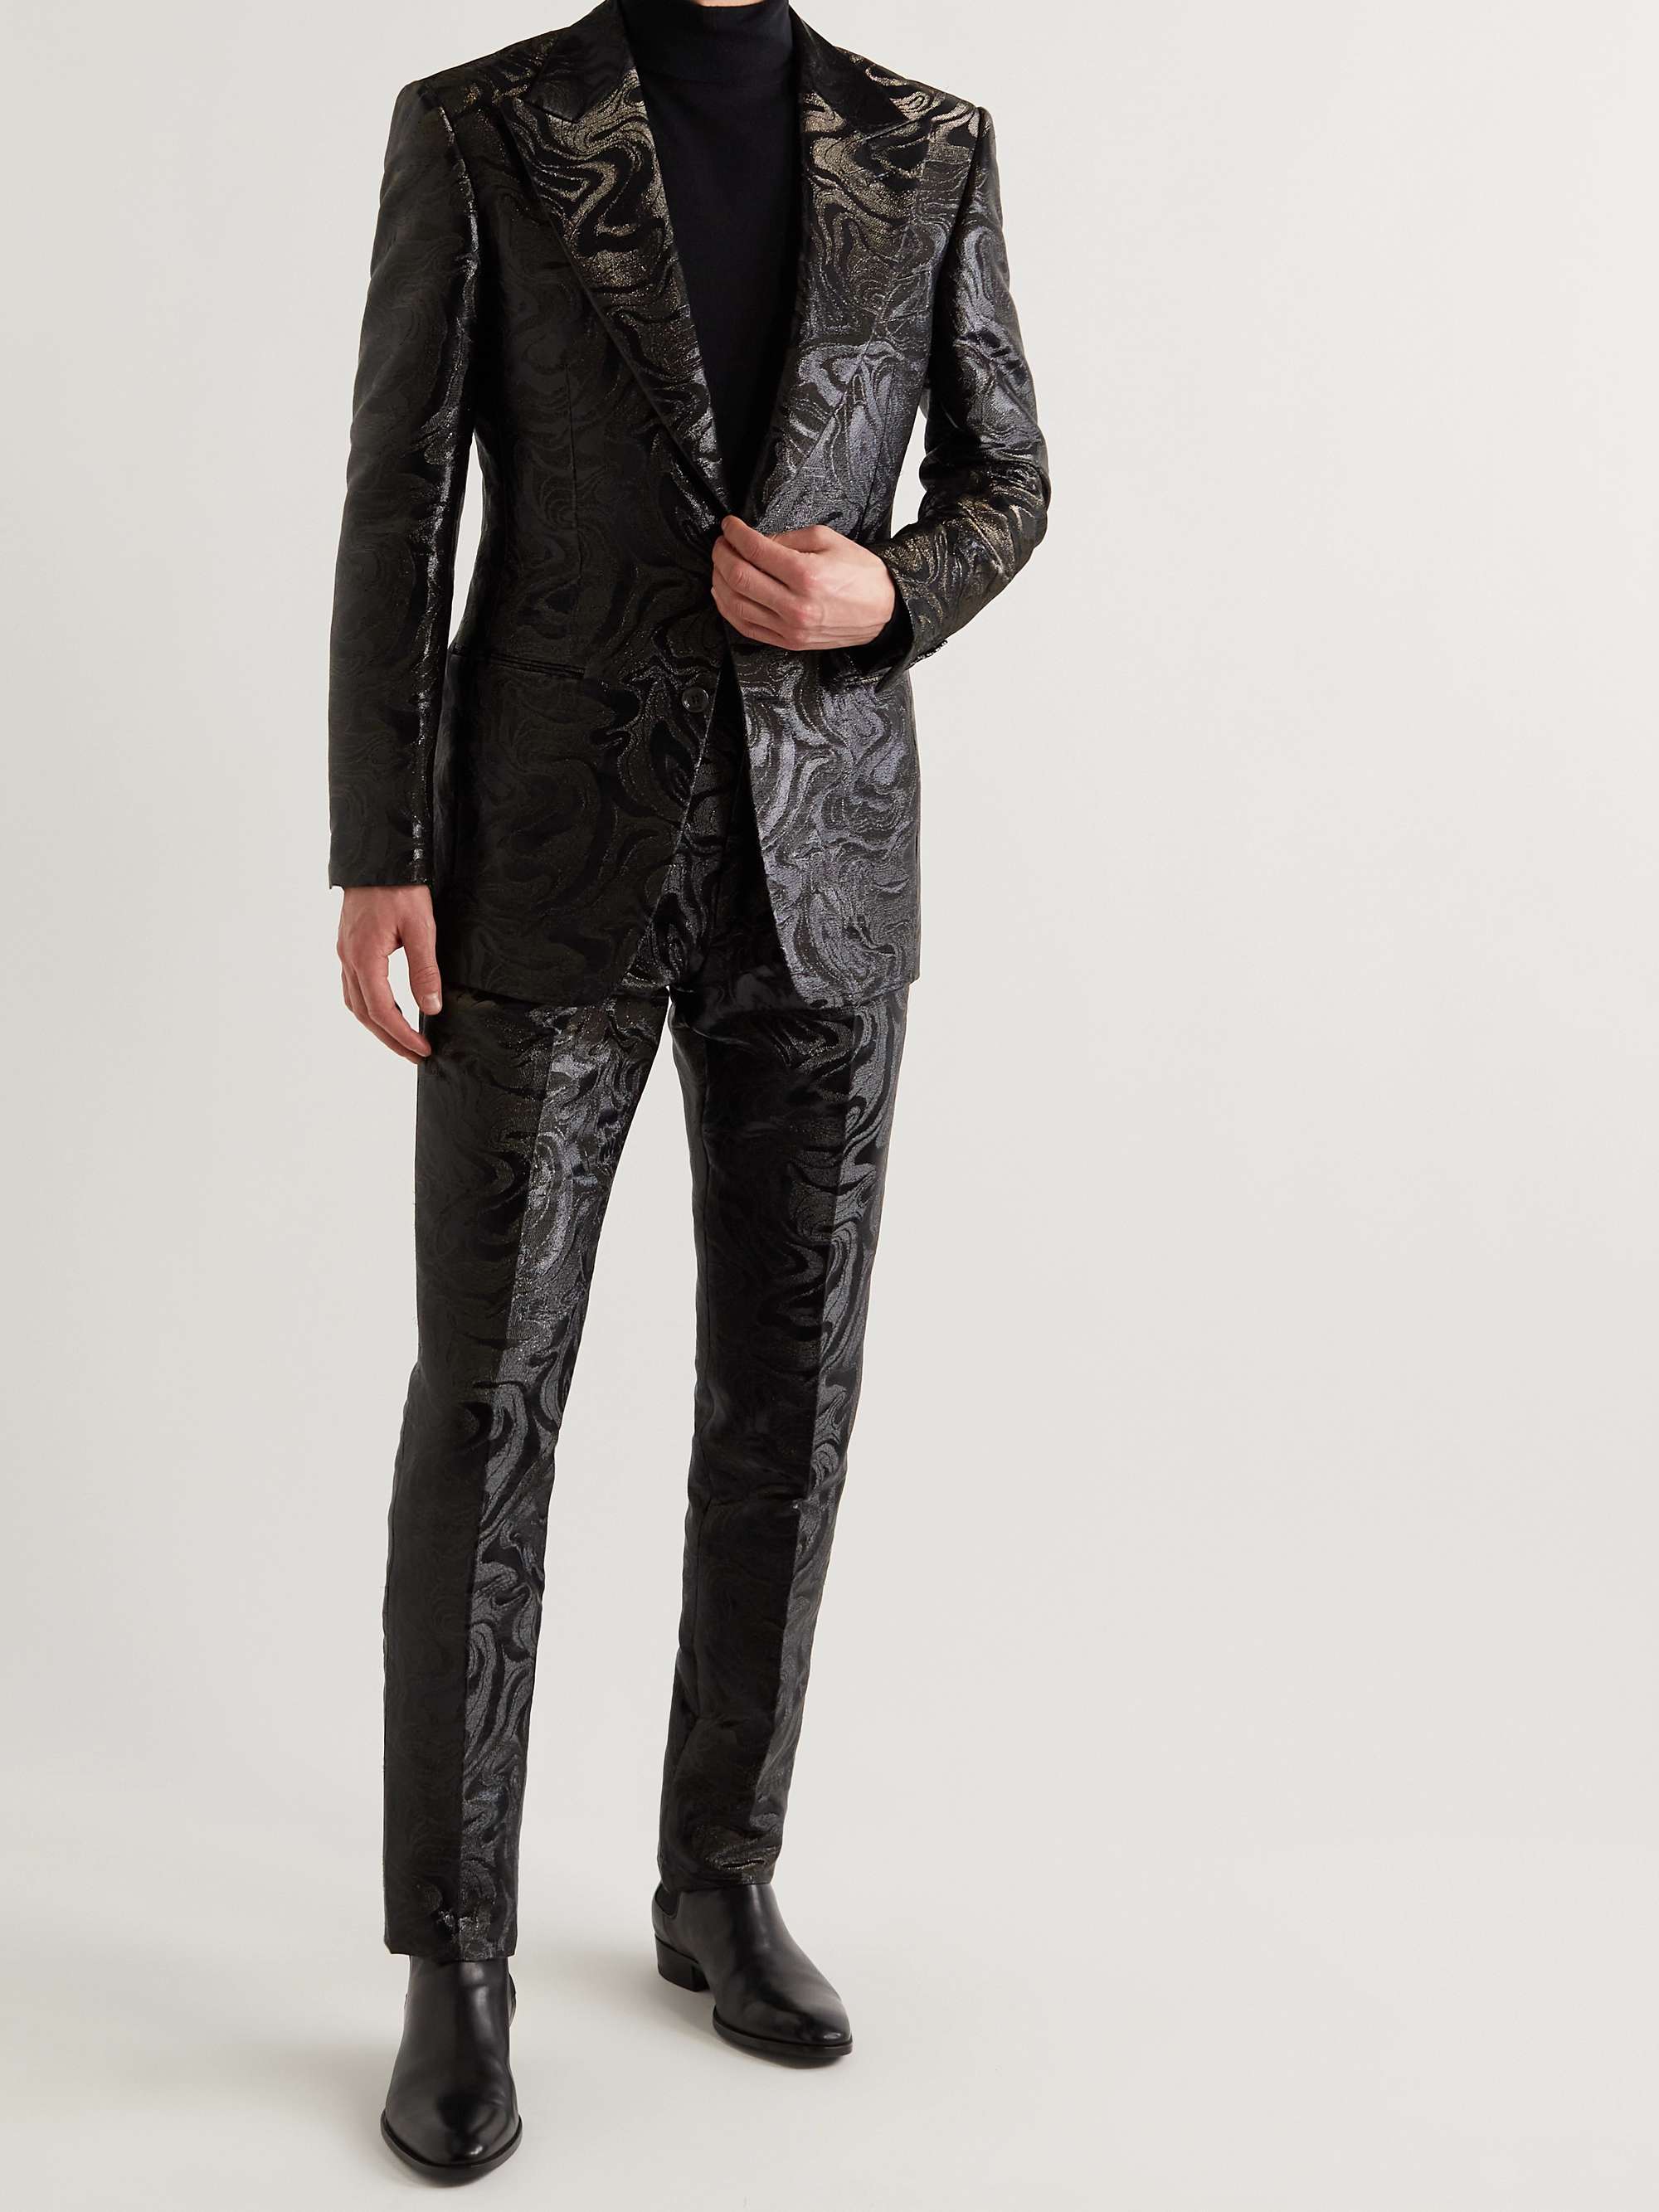 TOM FORD Spencer Slim-Fit Metallic Cotton-Blend Jacquard Tuxedo Jacket